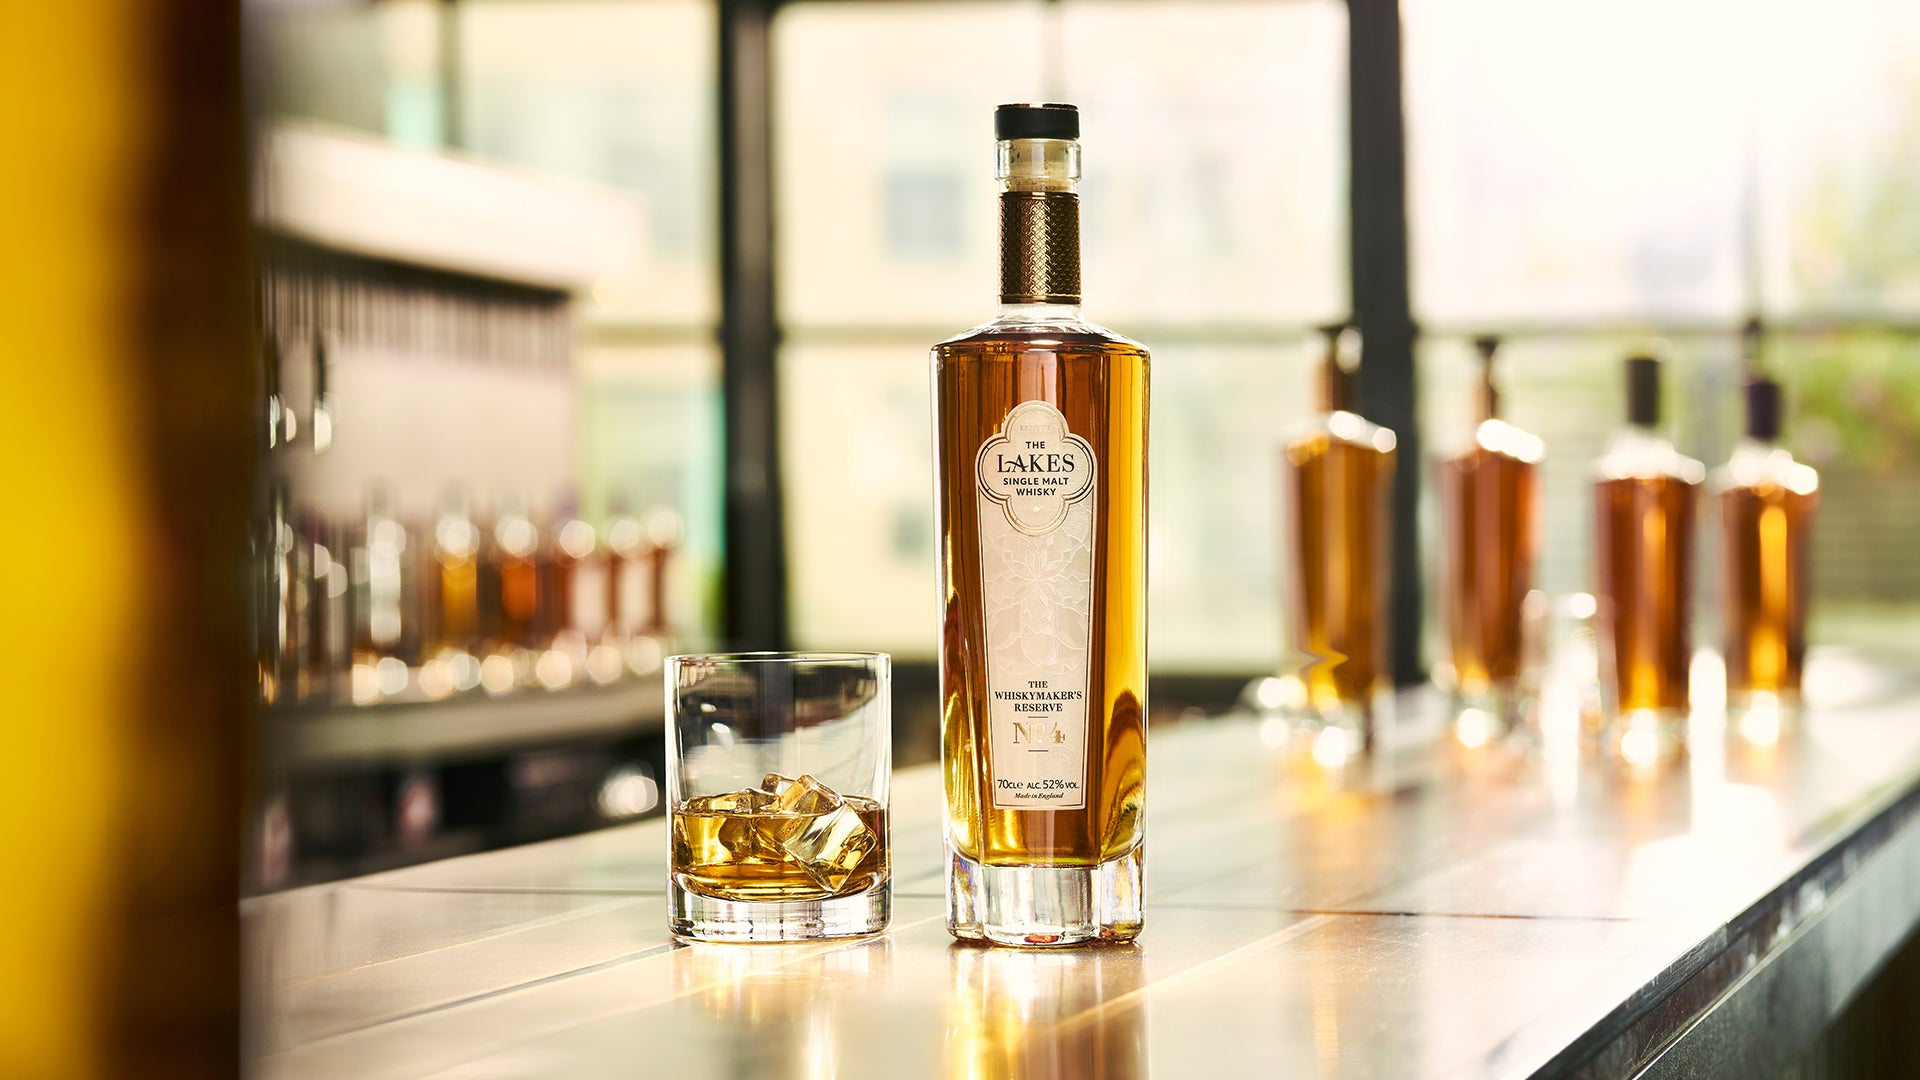 Whiskymaker's Reserve No.4 wins World's Best Single Malt award